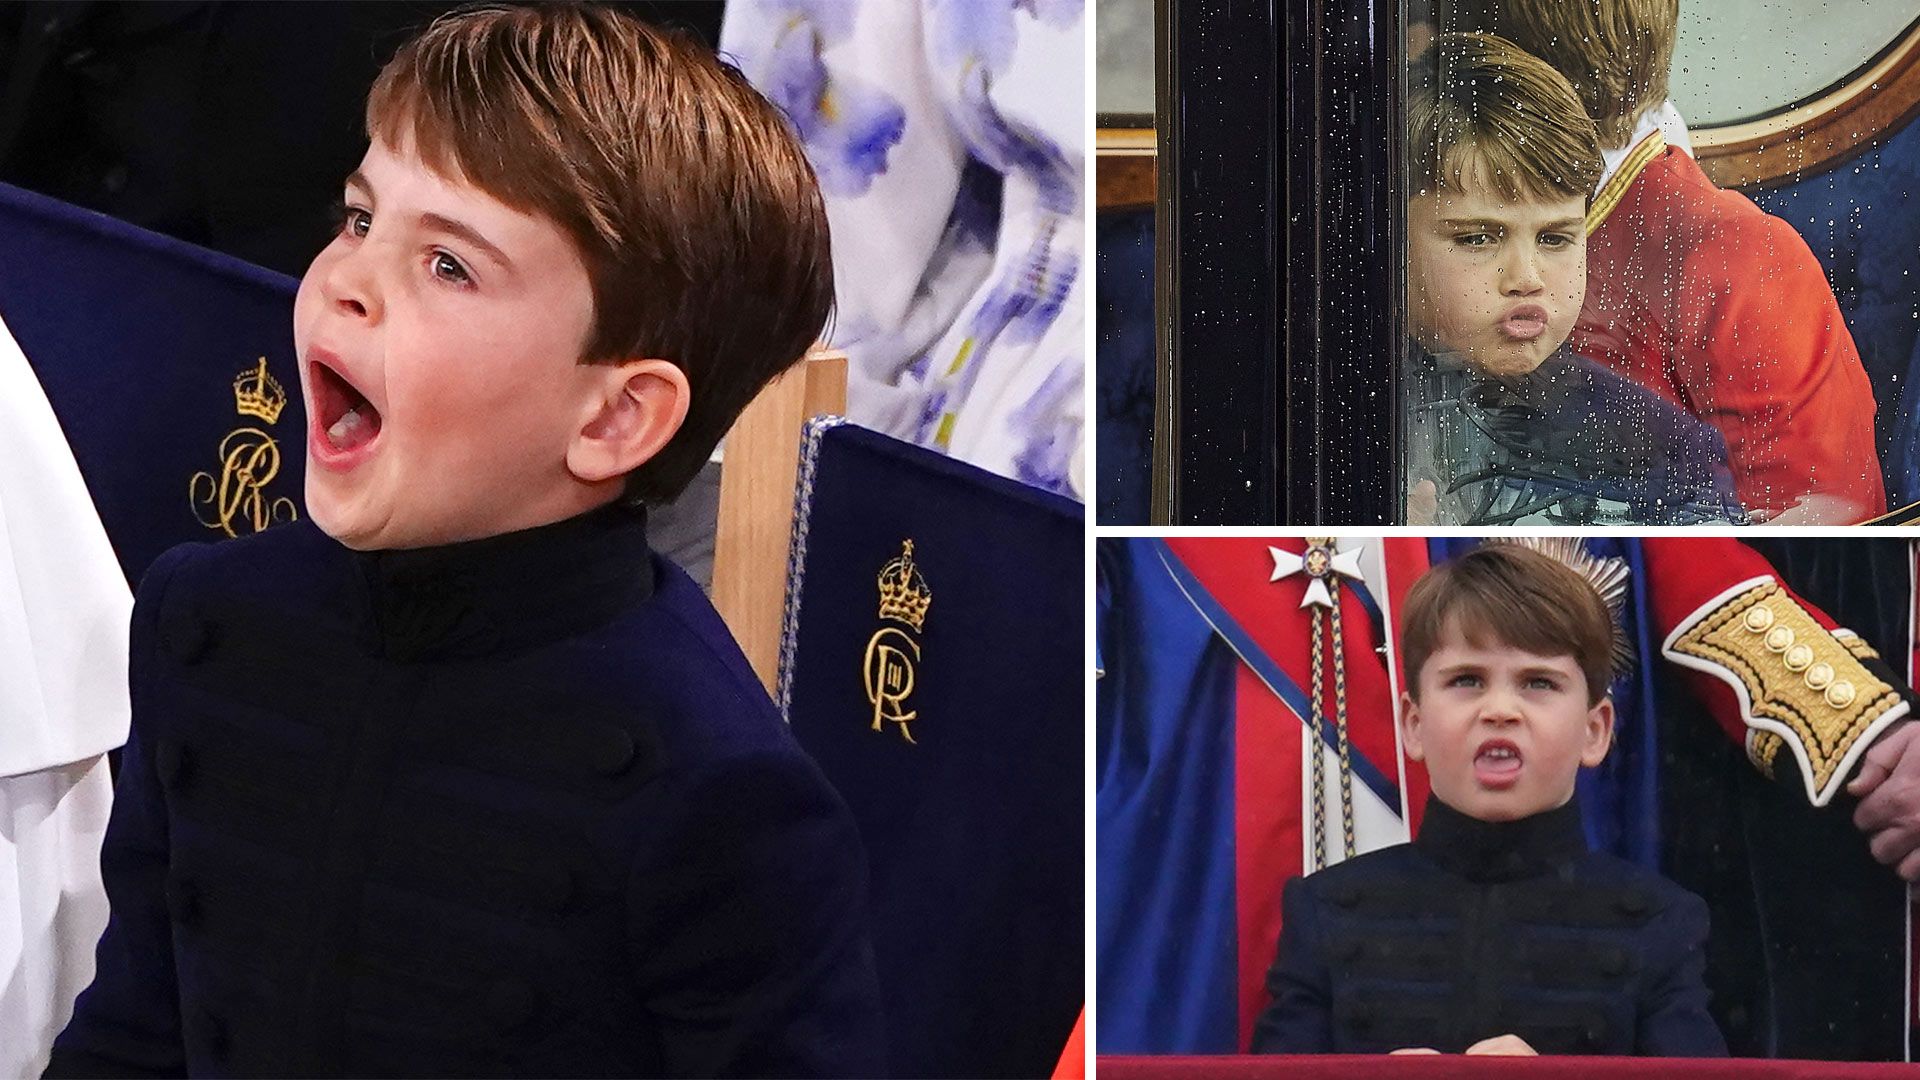 Prince Louis pulls cheeky expressions at King Charles' coronation